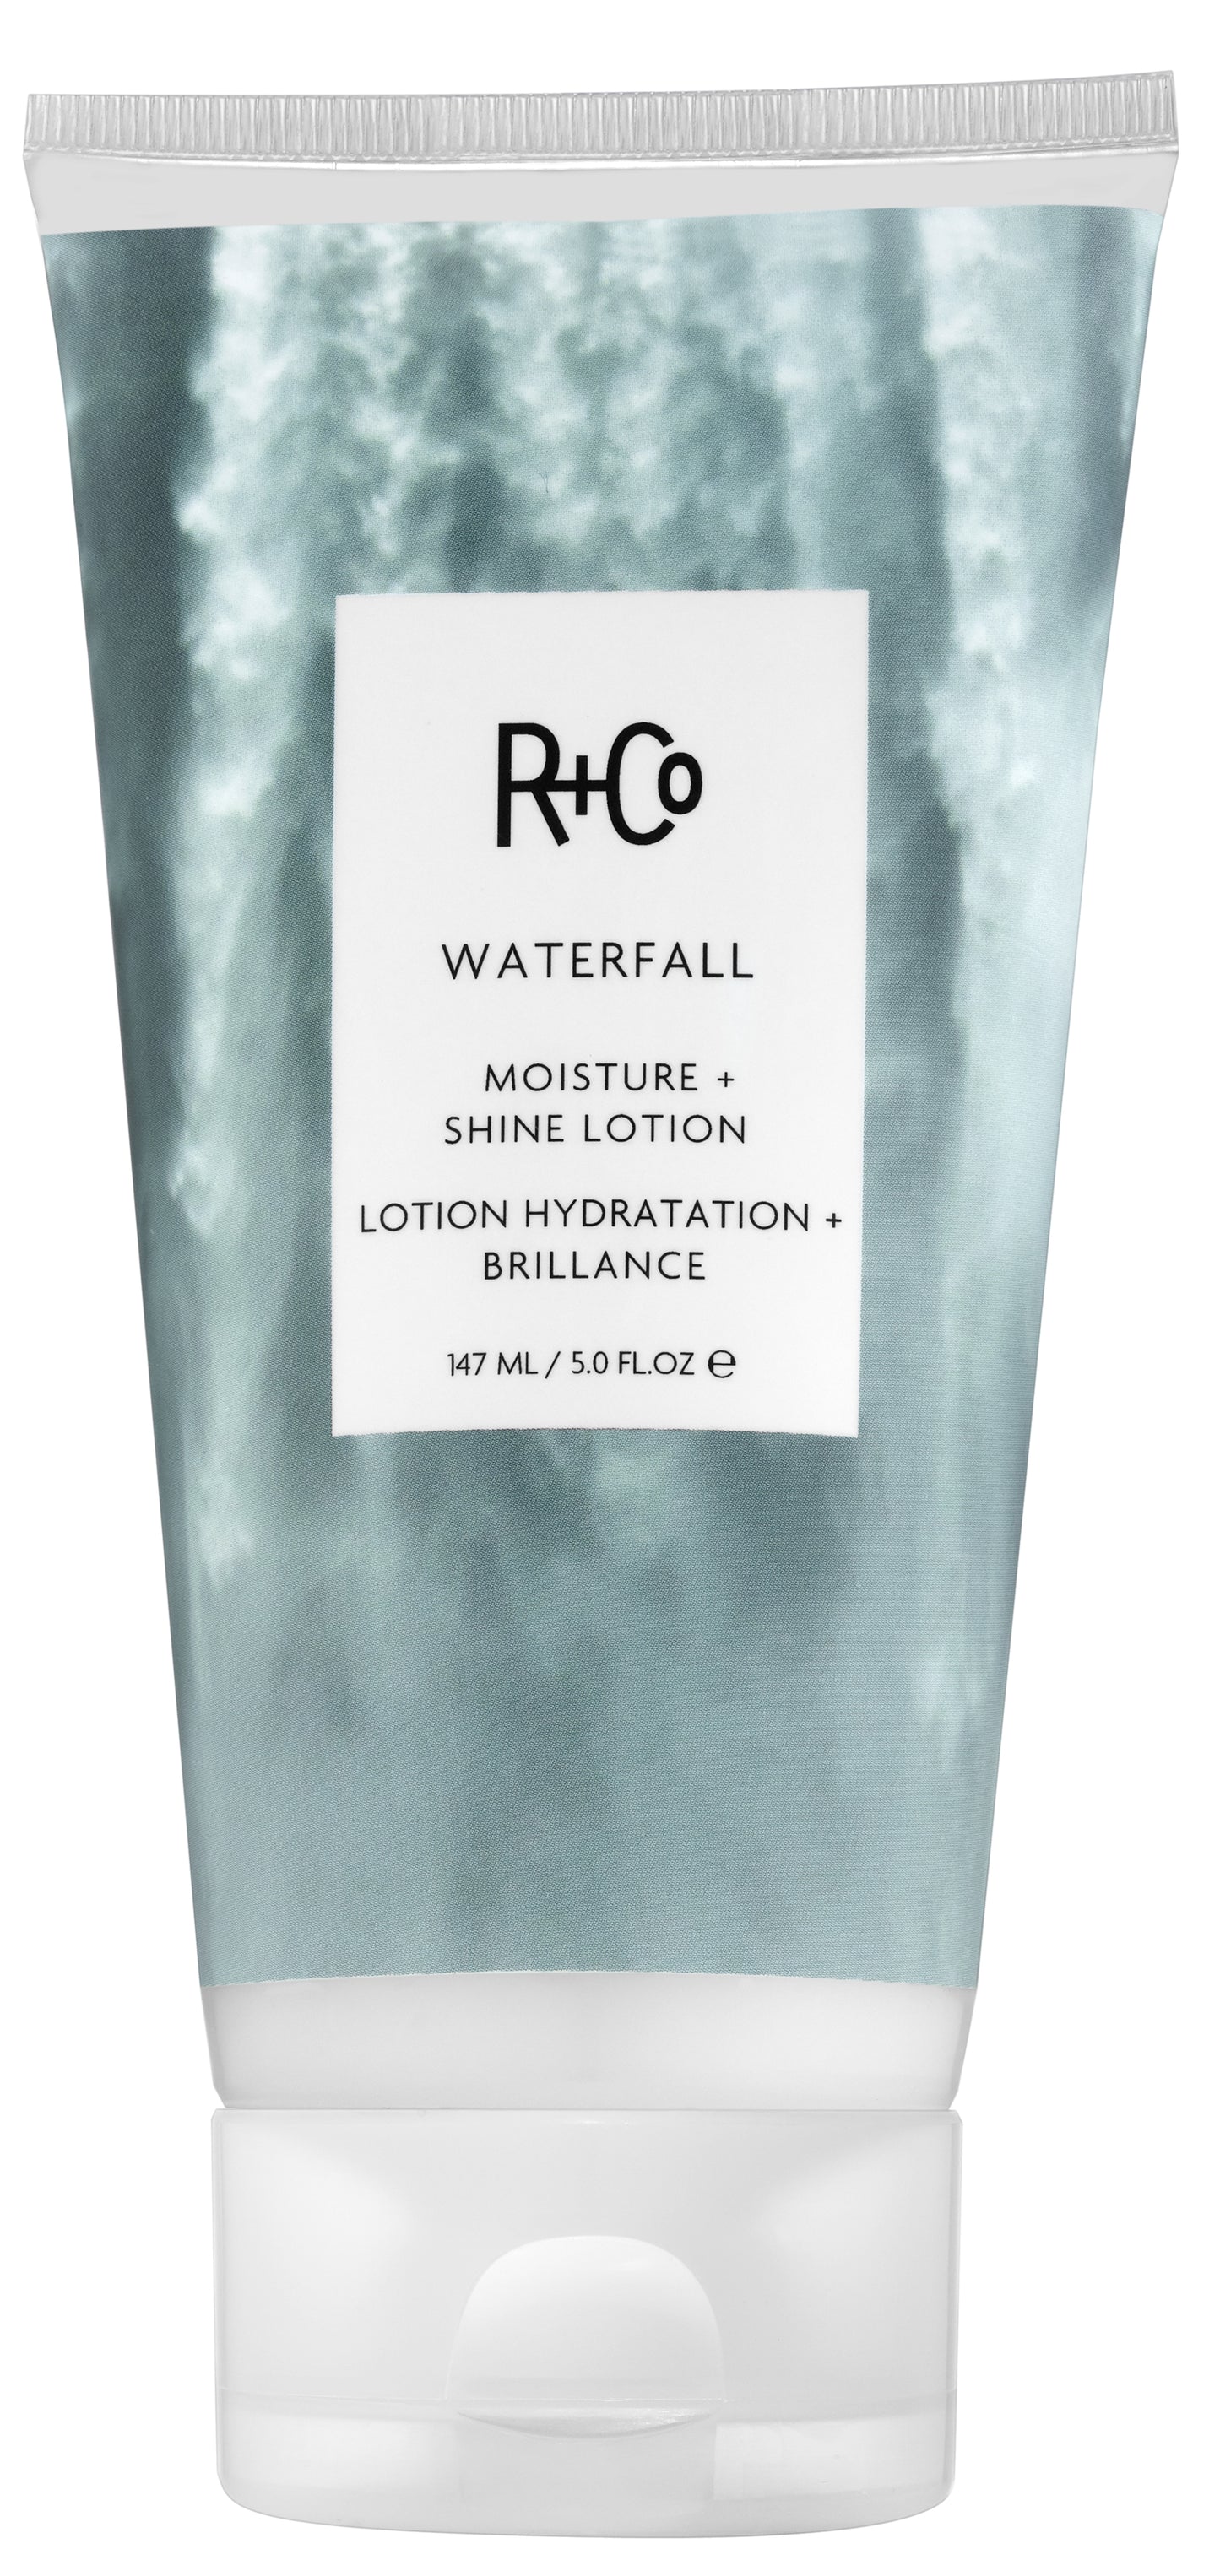 R+Co Waterfall Moisture + Shine Lotion, 147 ml